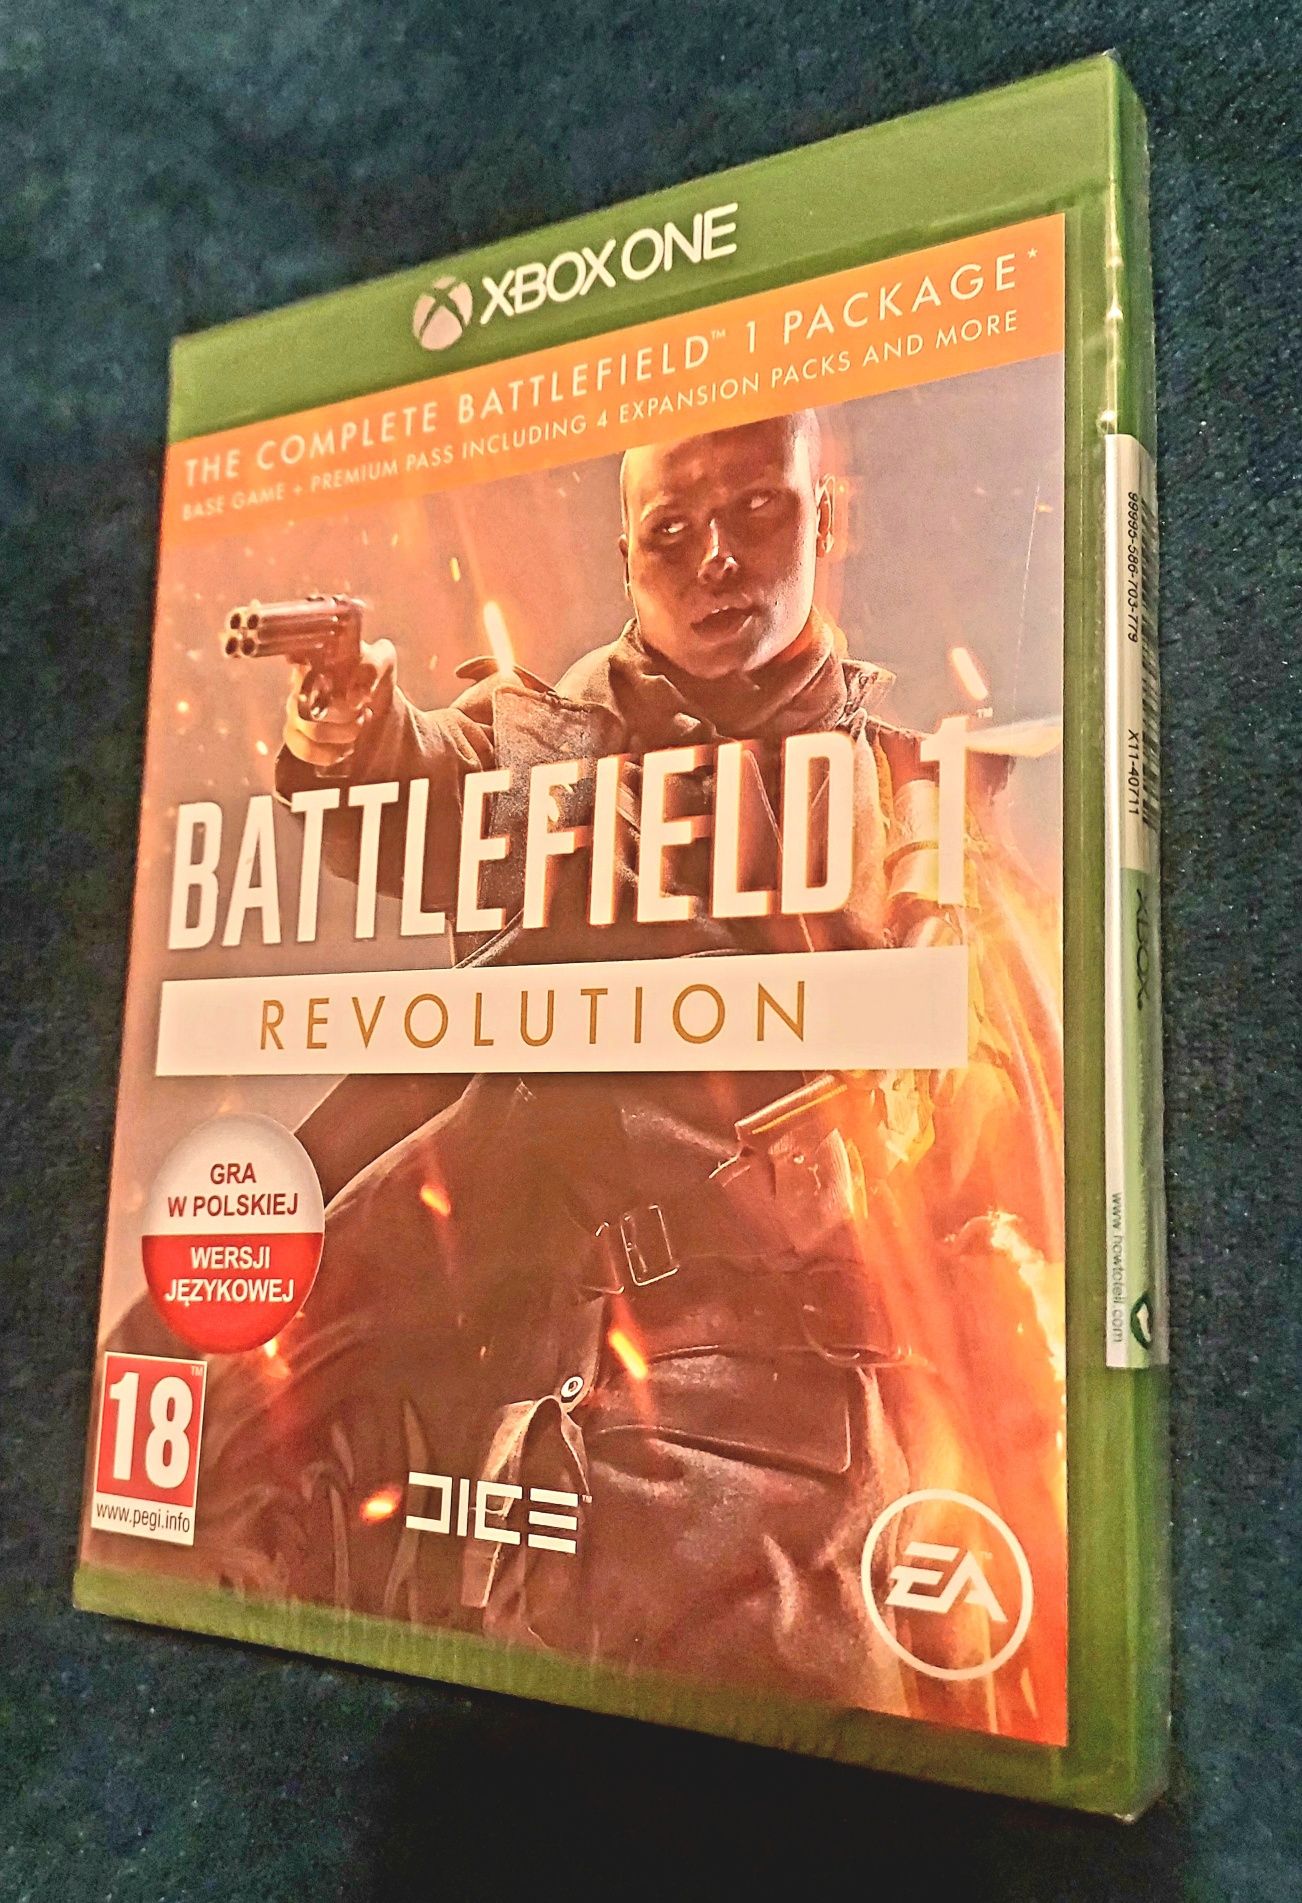 Battlefield 1 Revolution Xbox One